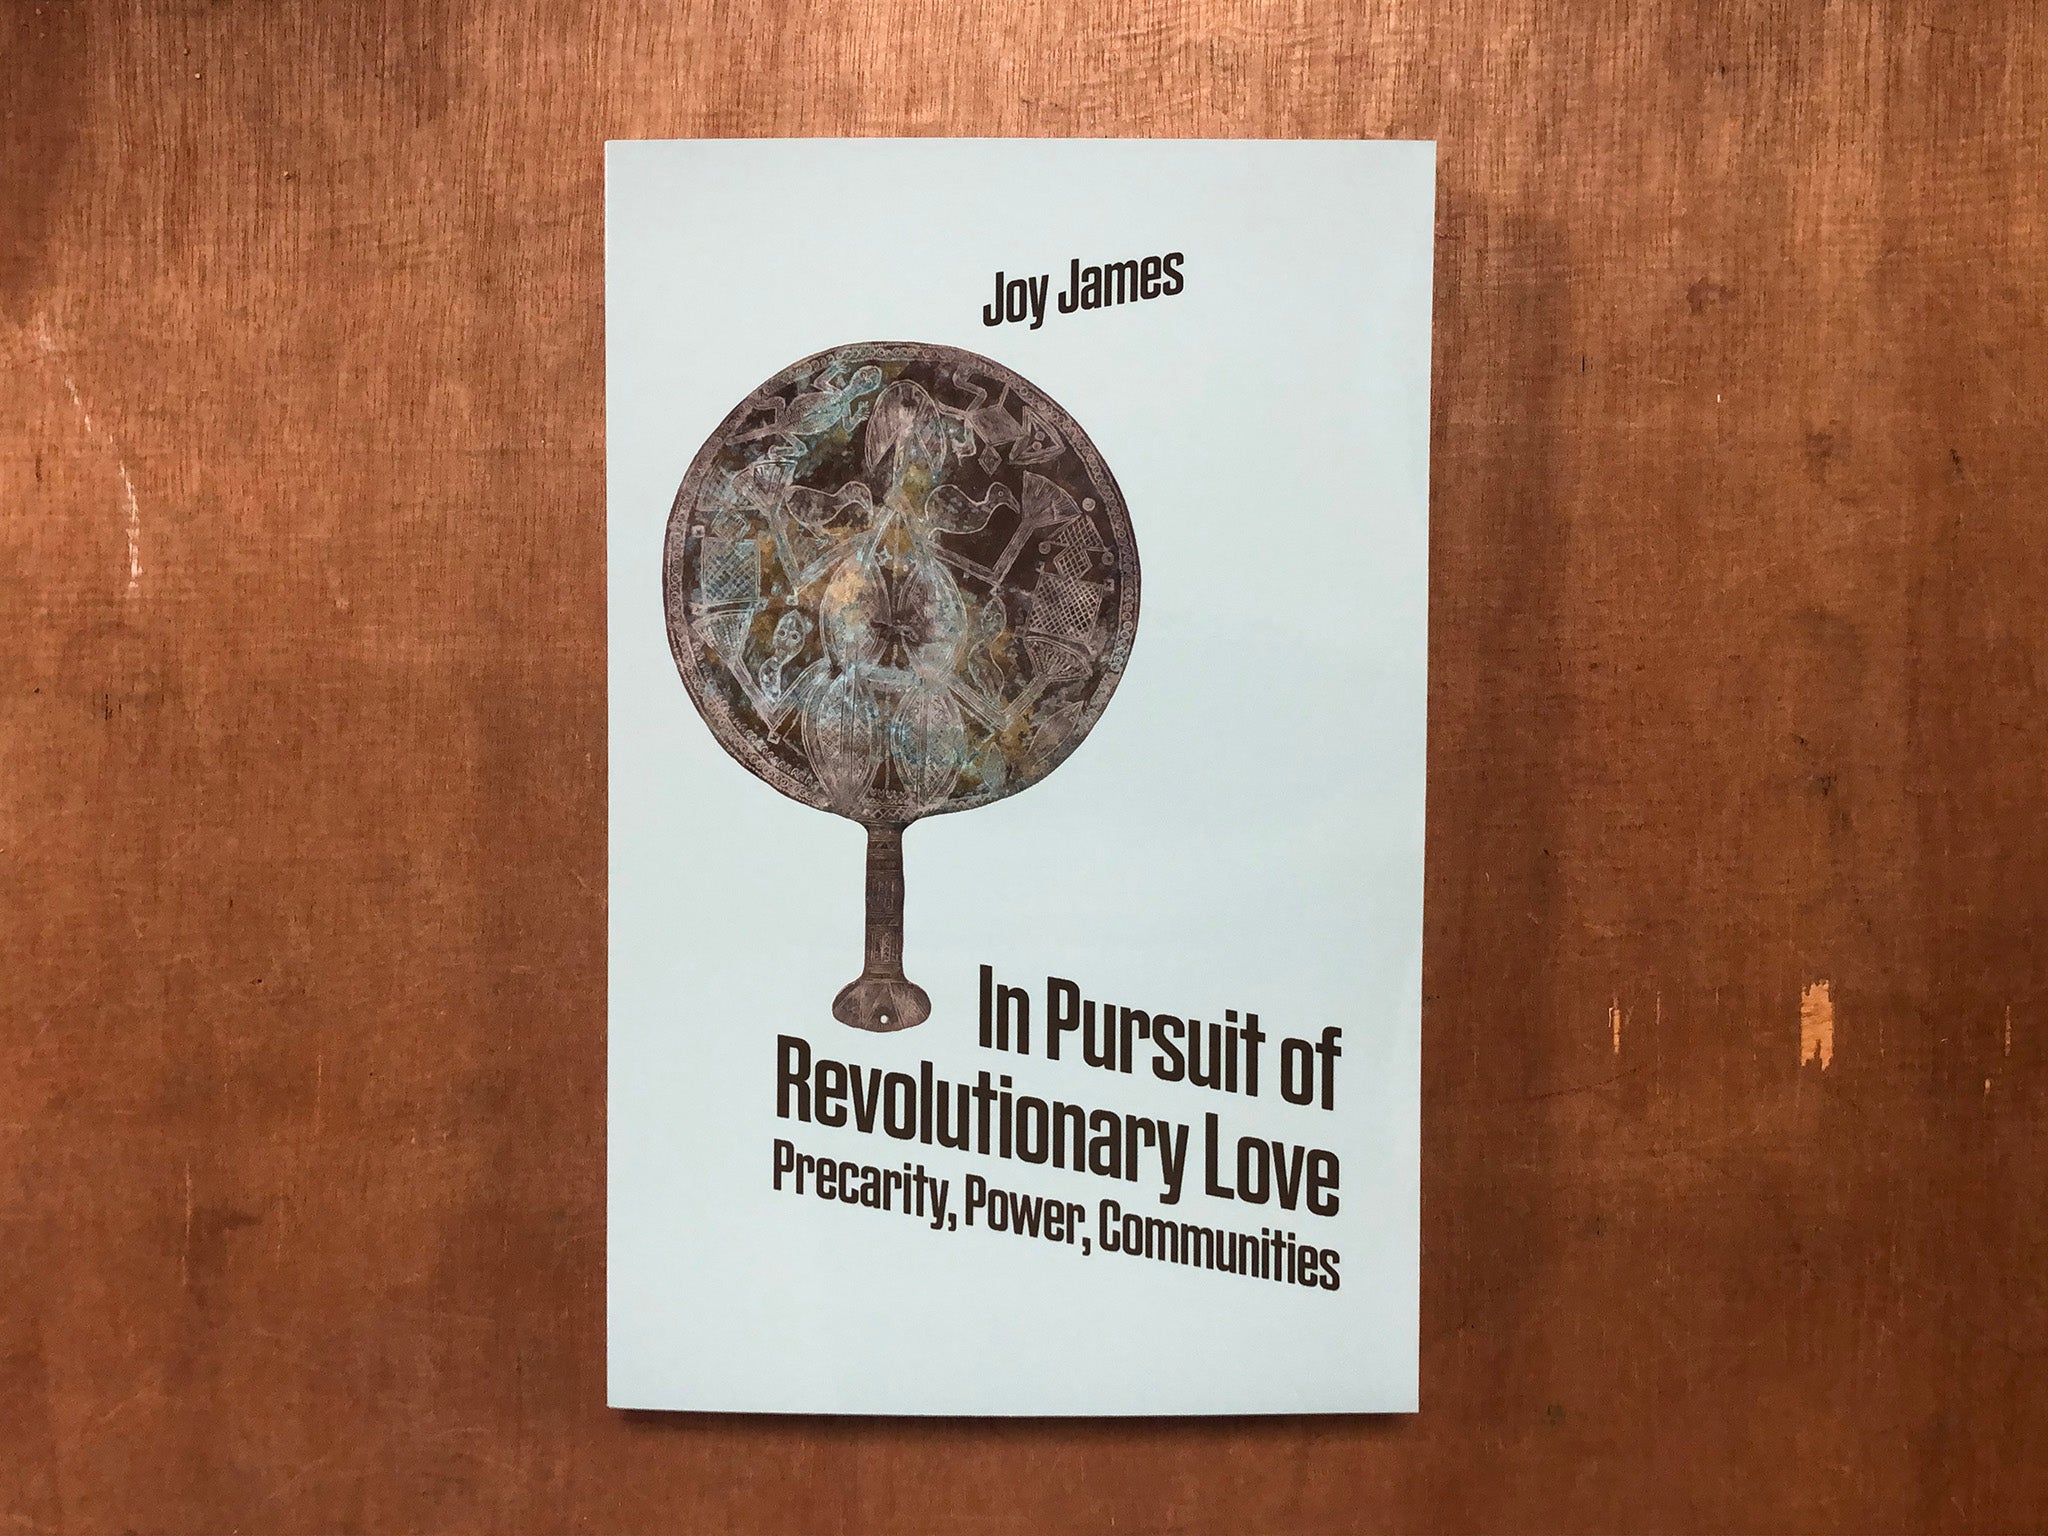 IN PURSUIT OF REVOLUTIONARY LOVE: PRECARITY, POWER, COMMUNITIES by Joy James